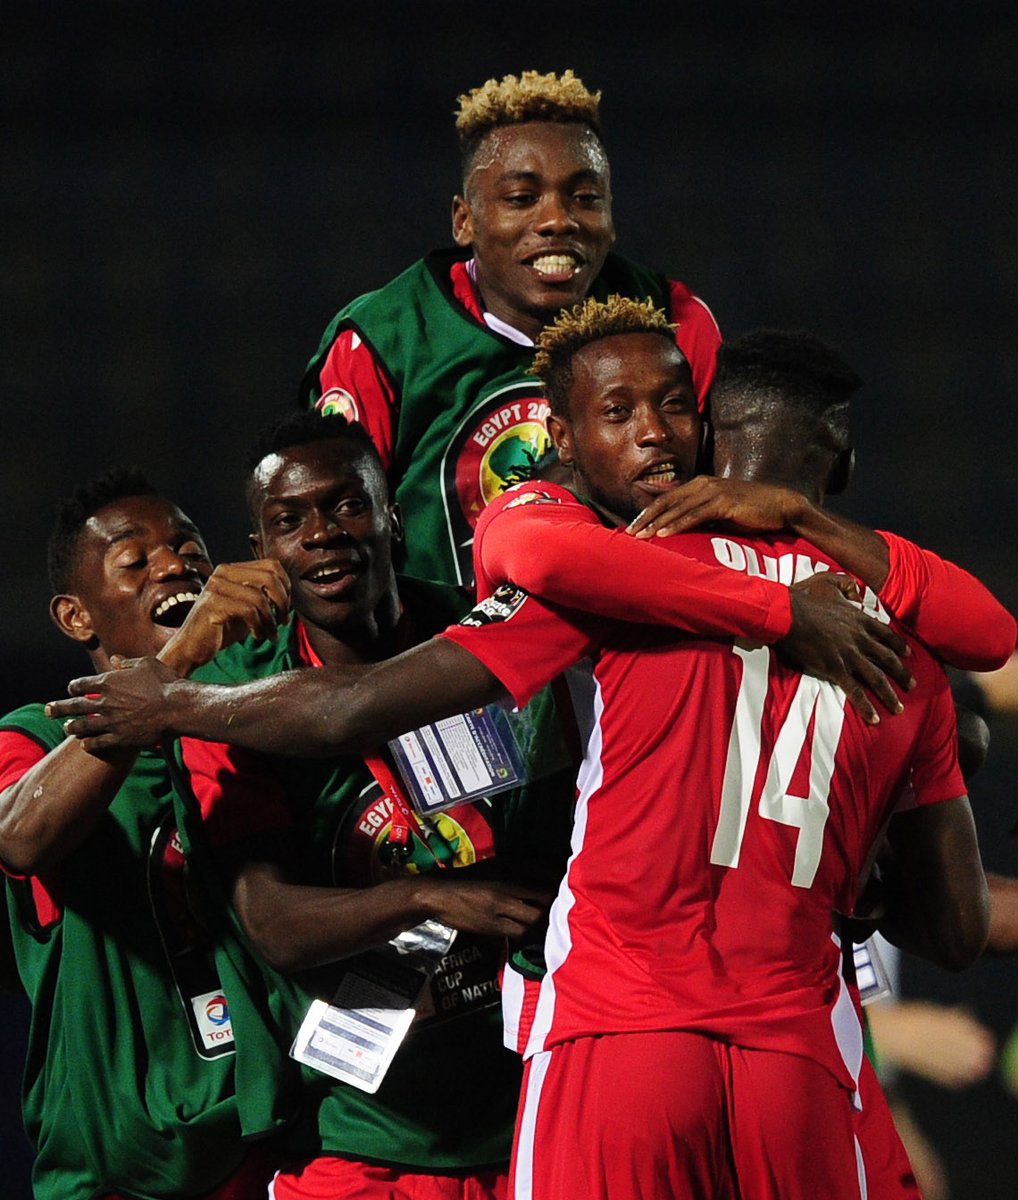 WATCH: AFCON 2019: Tanzania 2-3 Kenya | Goals and Highlights